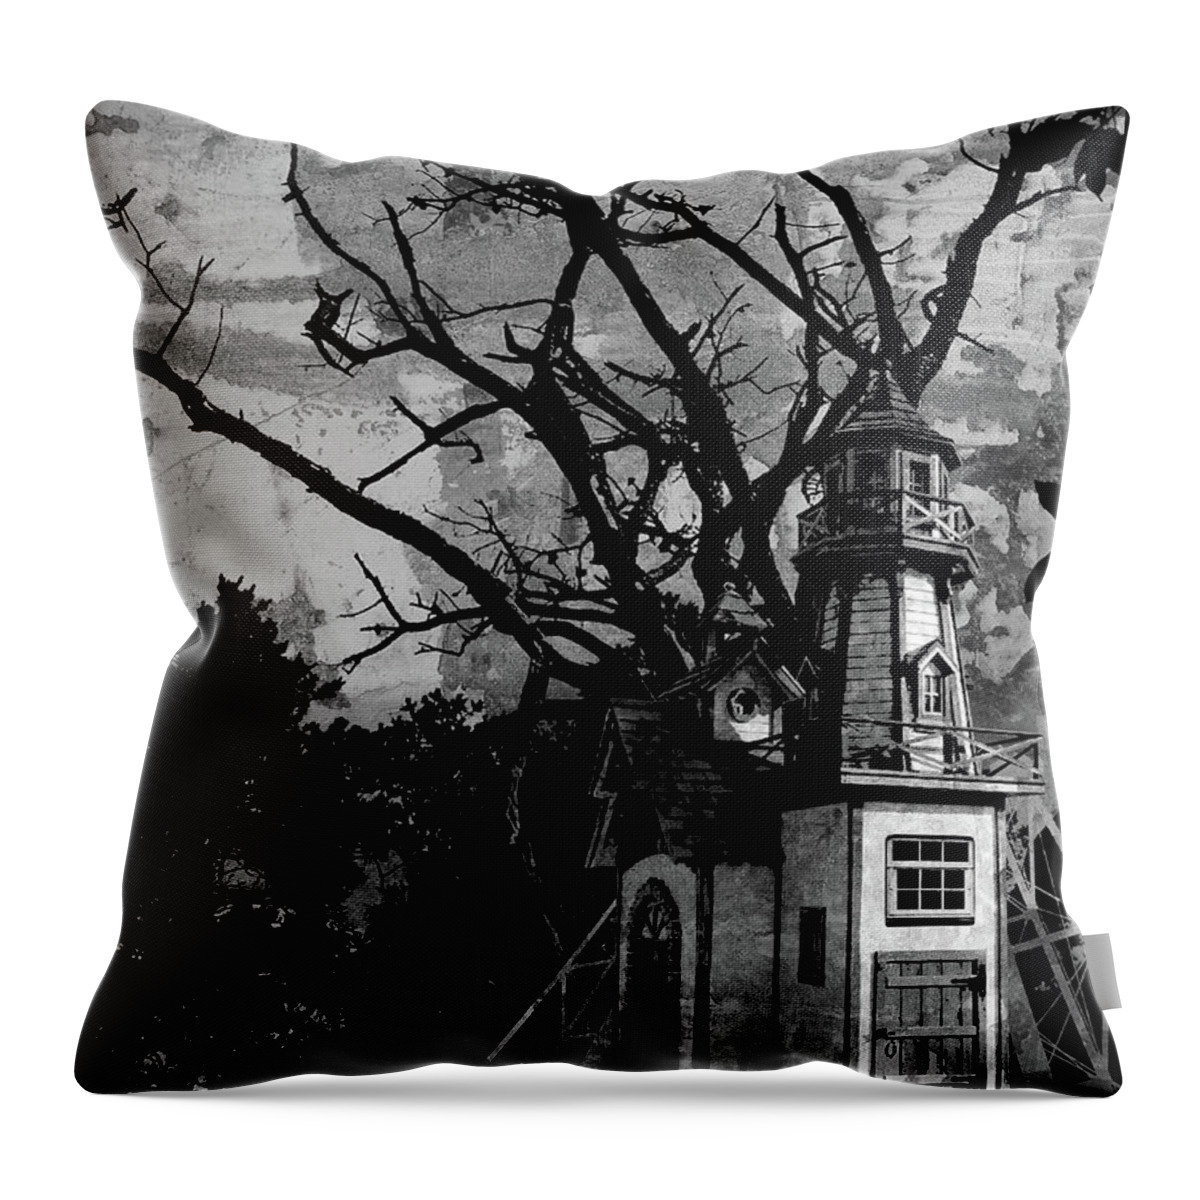 Jason Casteel Throw Pillow featuring the digital art Treehouse I by Jason Casteel